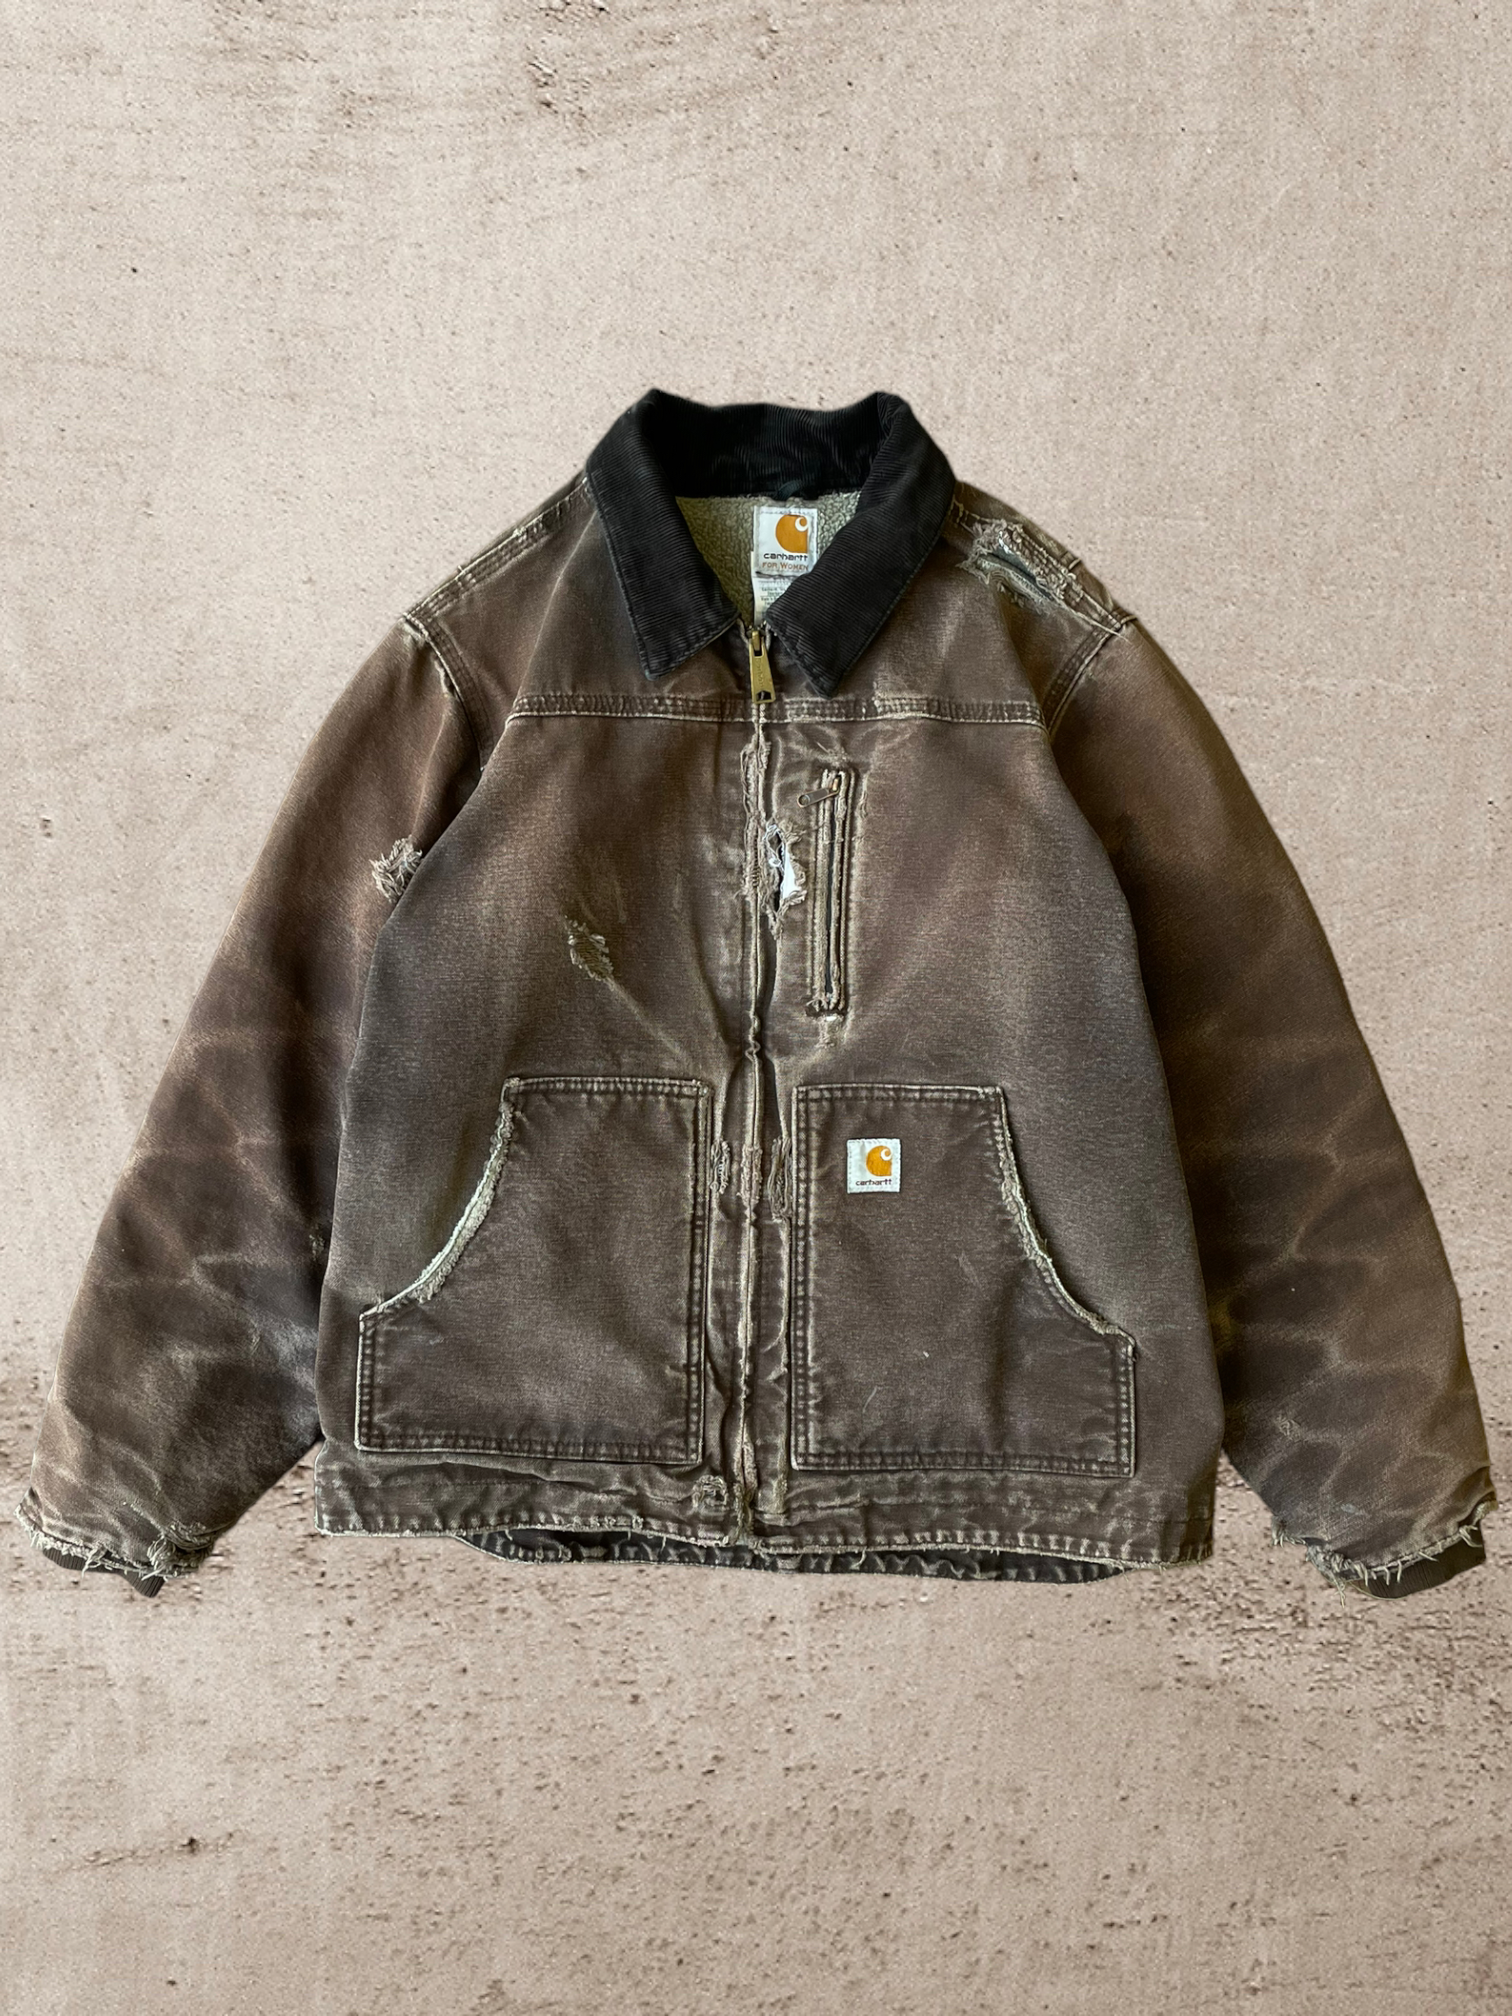 Distressed Carhartt Fleece Lined Jacket - Small